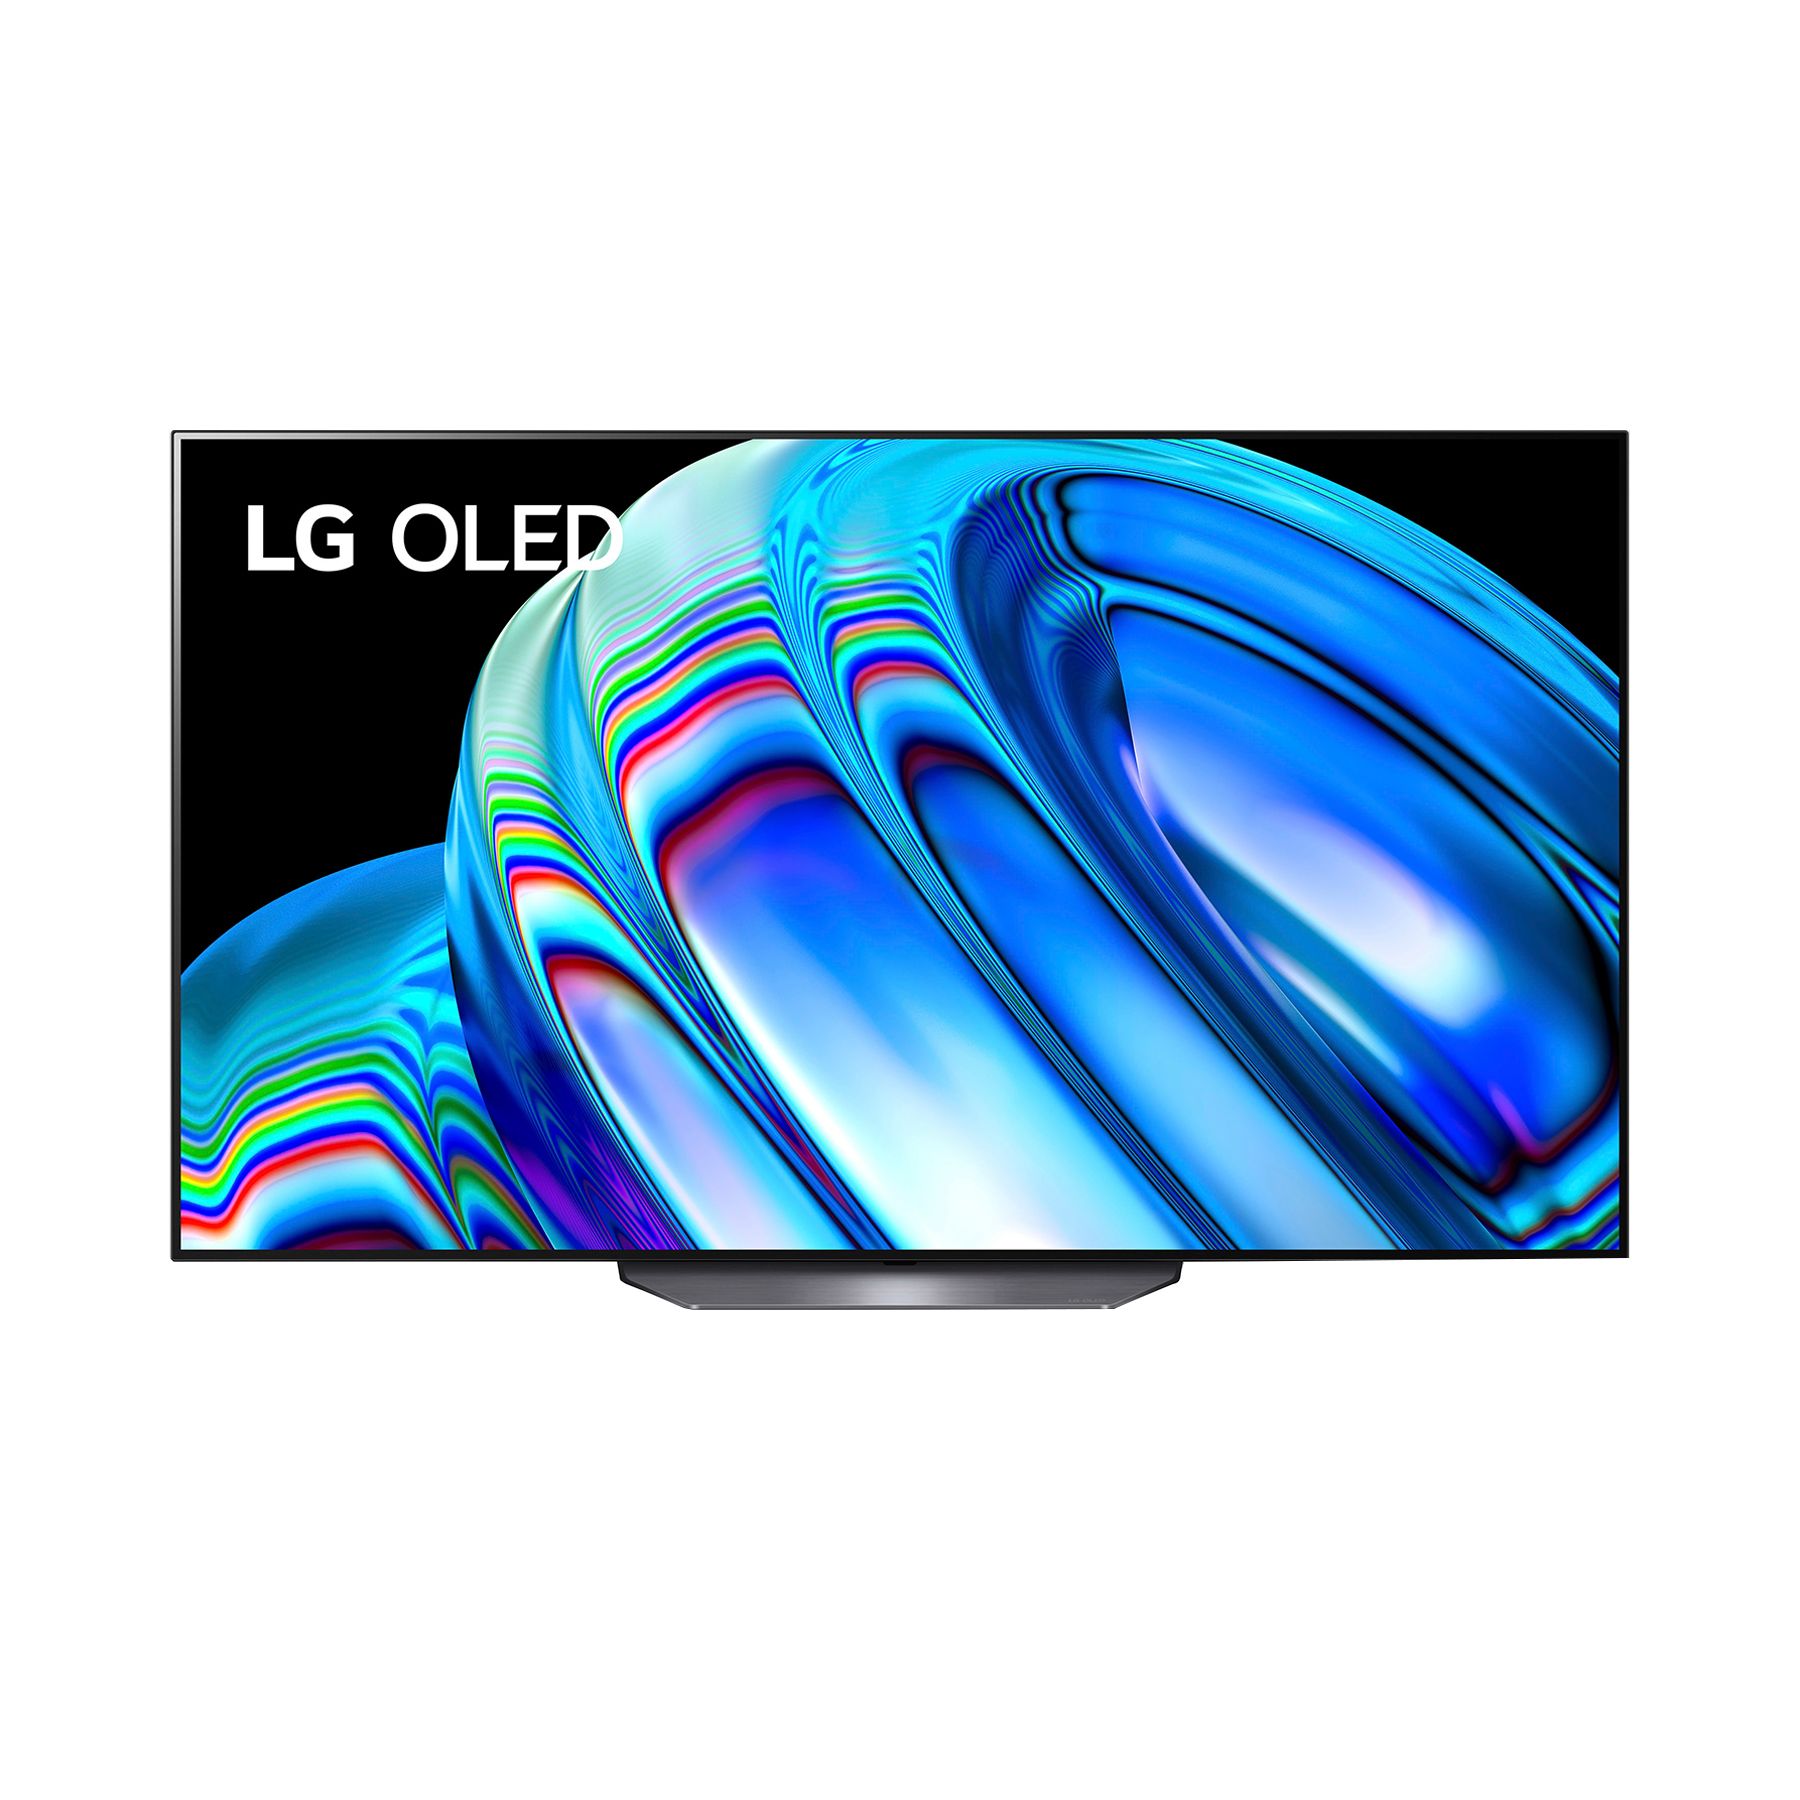 LG 65 OLEDB2 4K UHD Smart TV with AI ThinQ